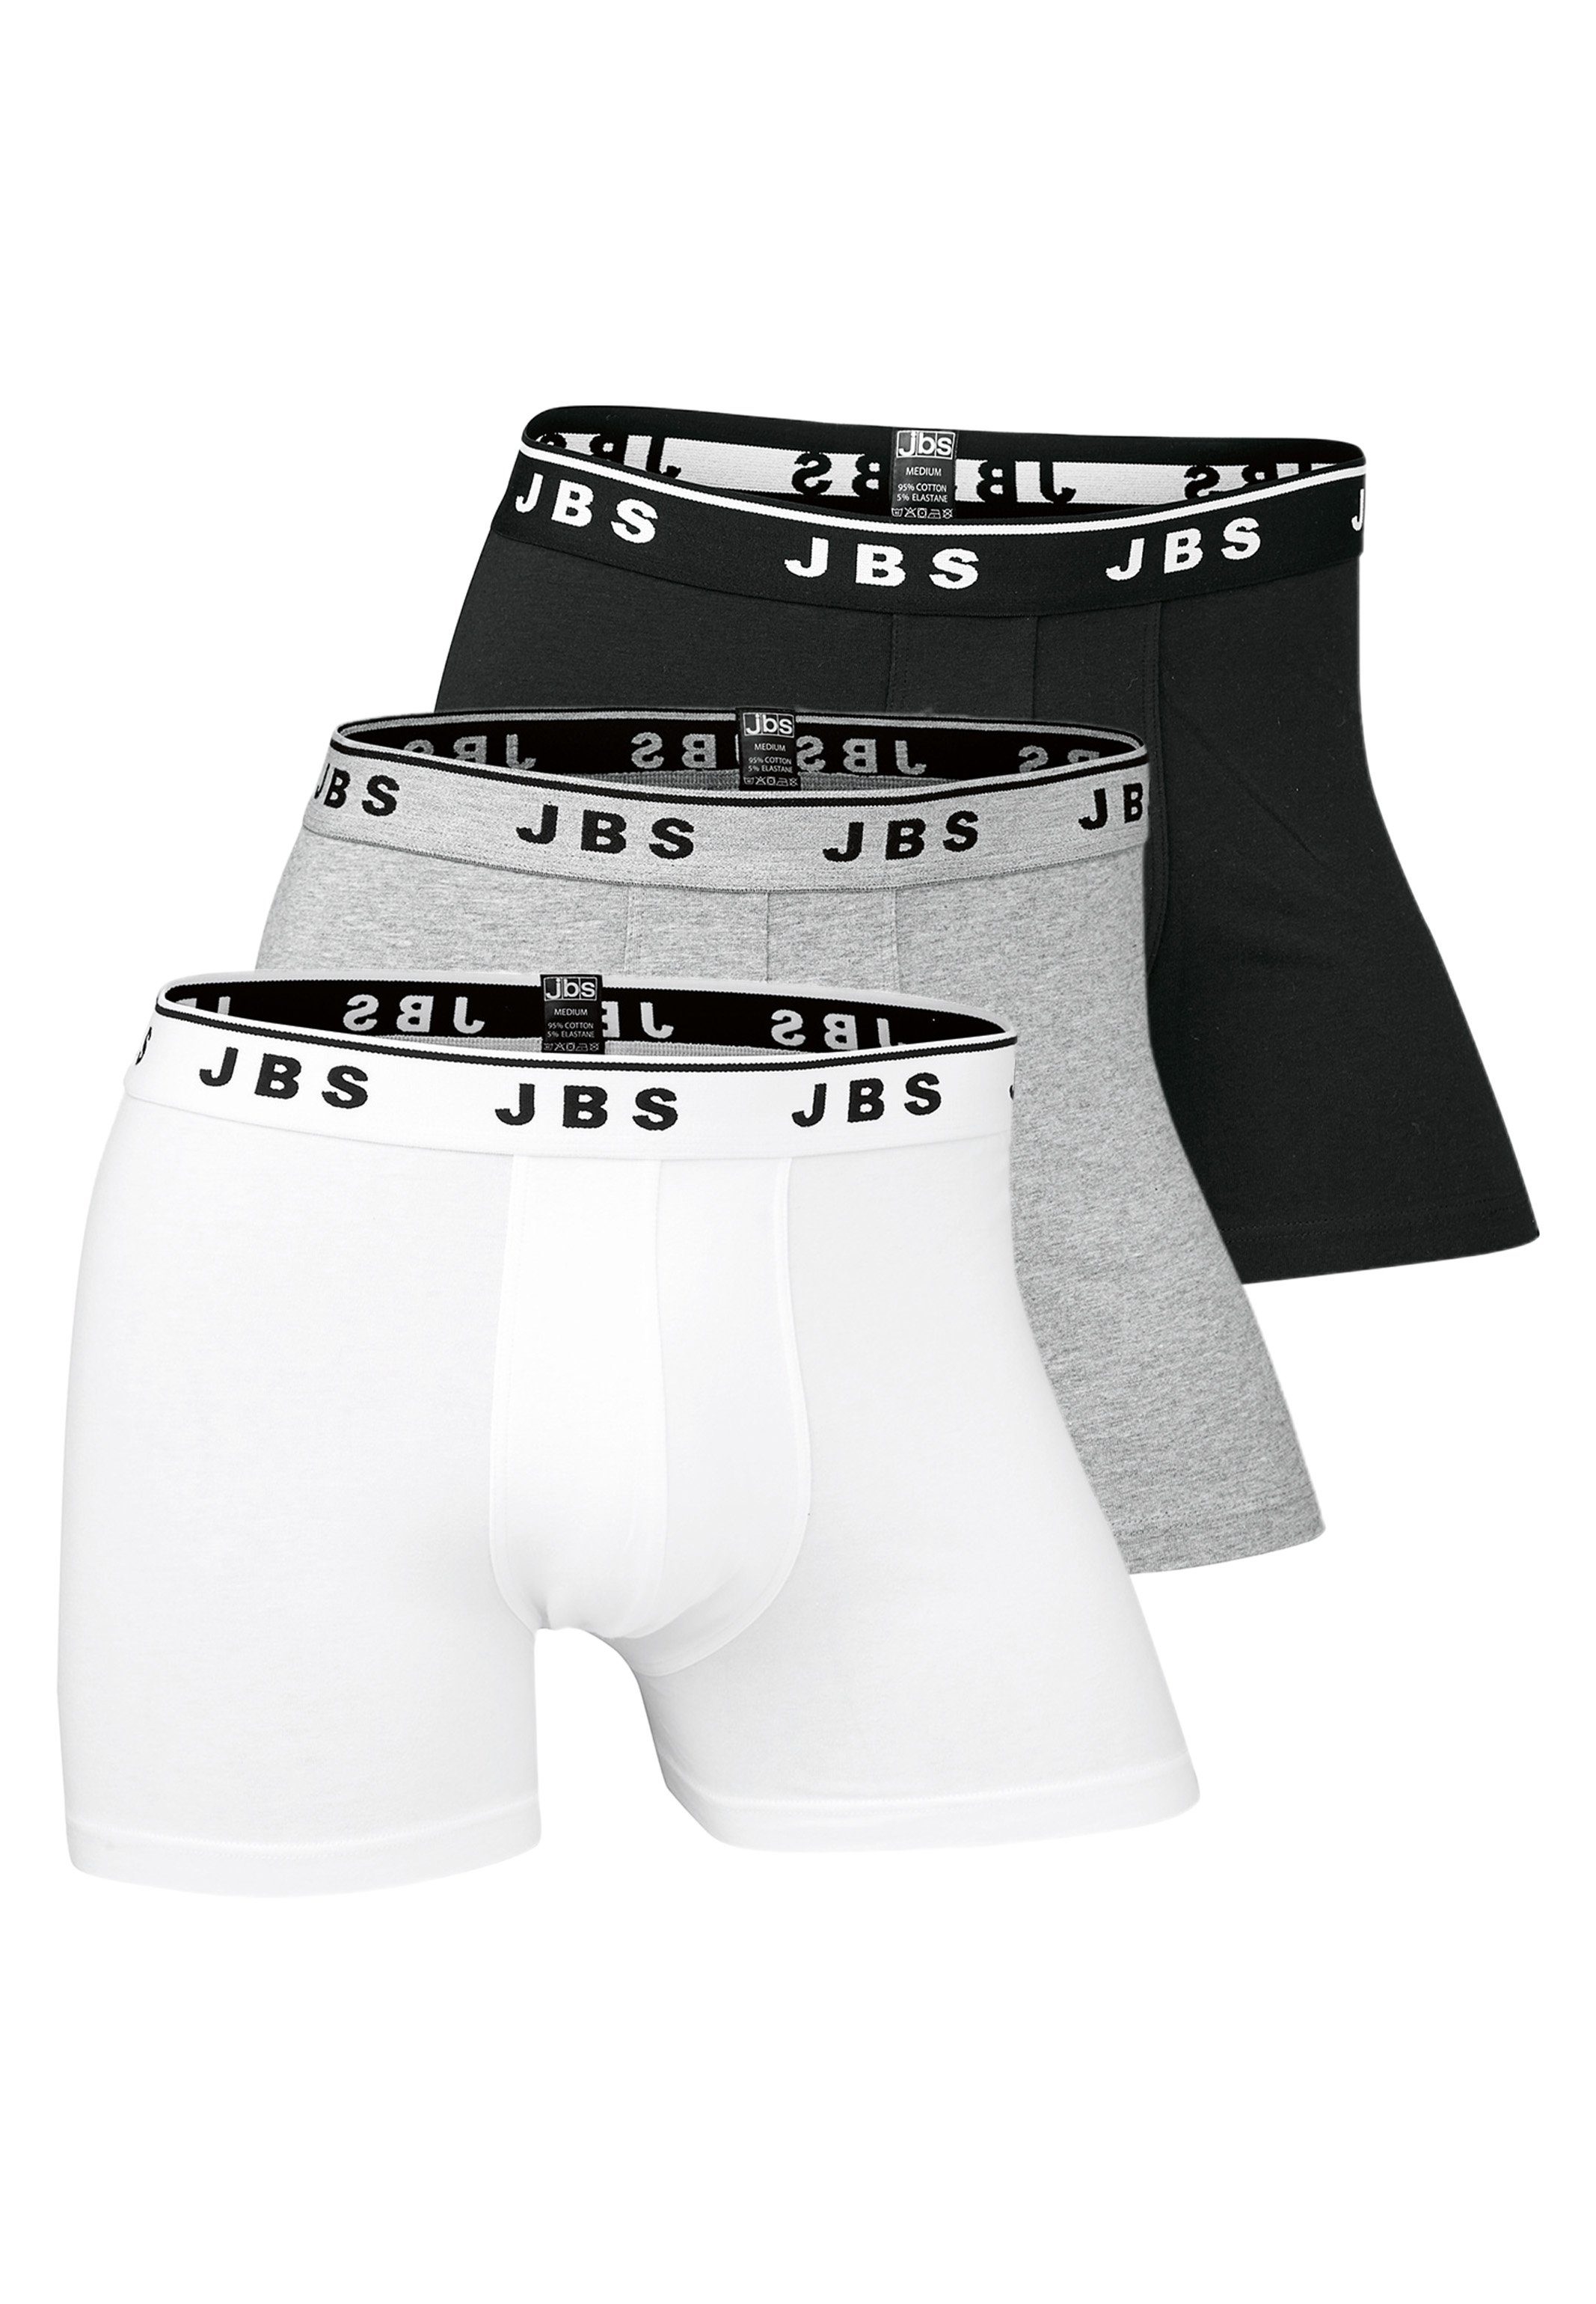 jbs Retro Boxer 3er Pack Organic Cotton (Spar-Set, 3-St) Long Short / Pant - Baumwolle - Ohne Eingriff - Atmungsaktiv Schwarz / Grau / Weiß | Boxer anliegend